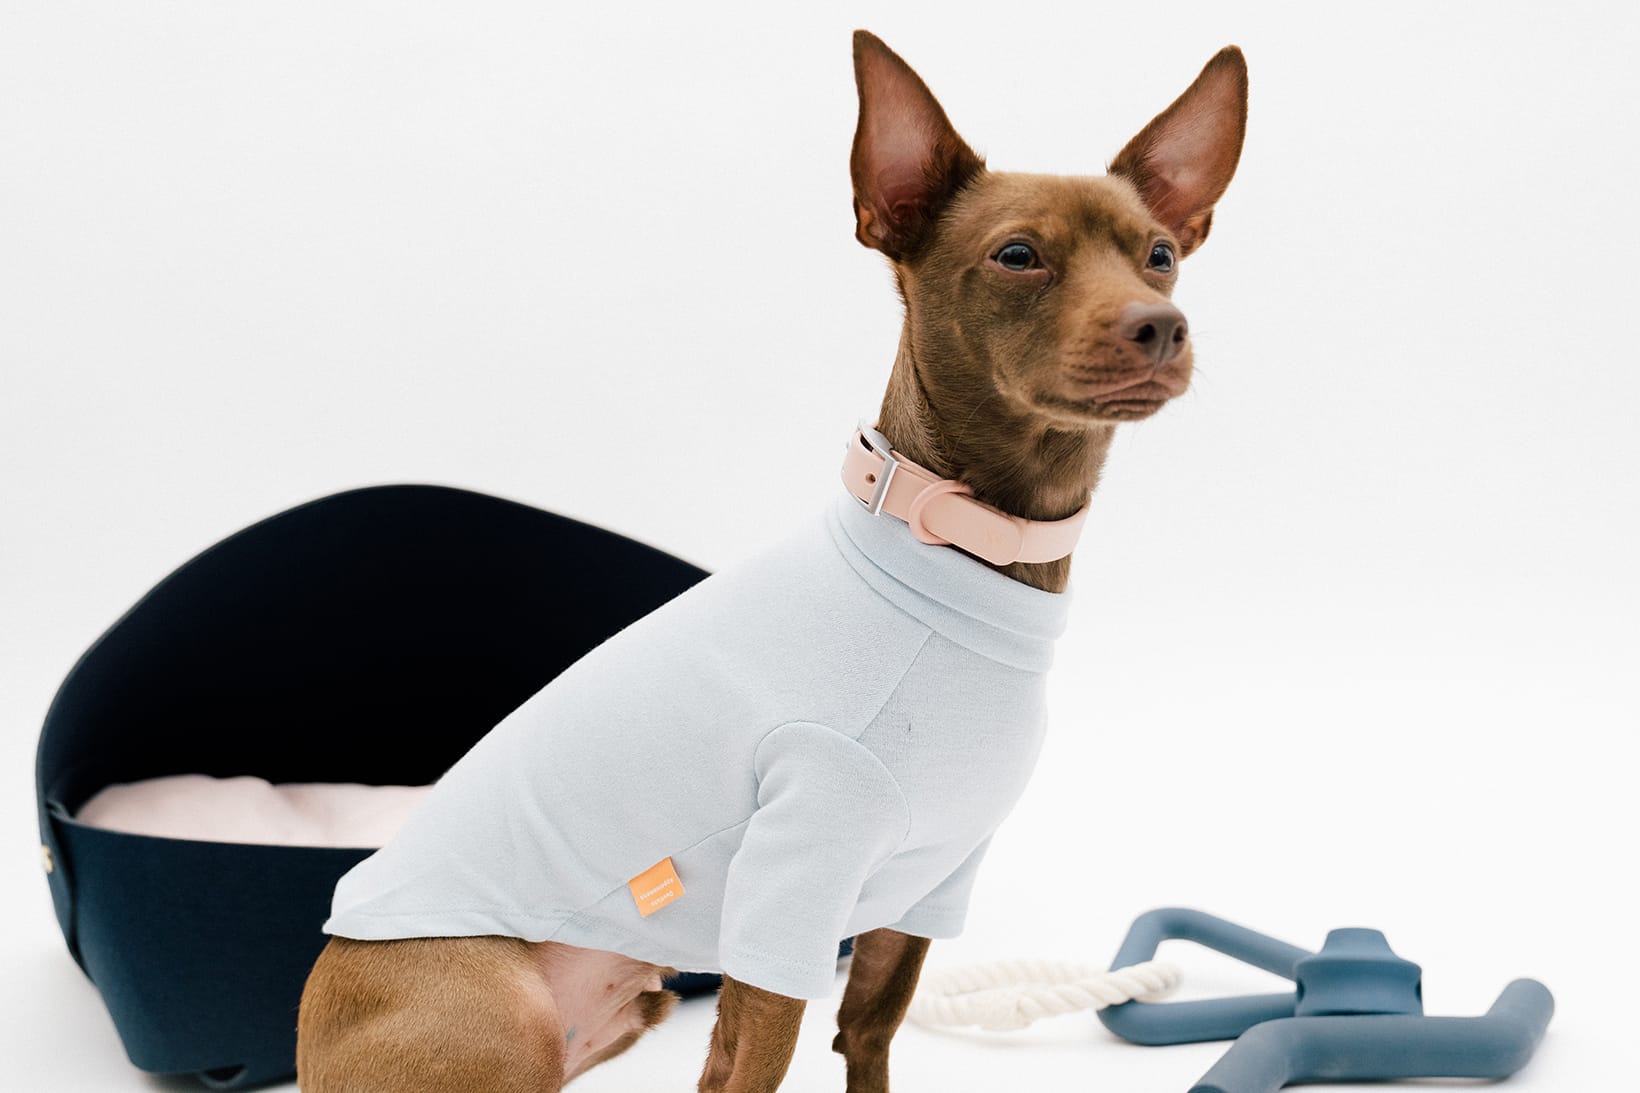 luxury dog apparel